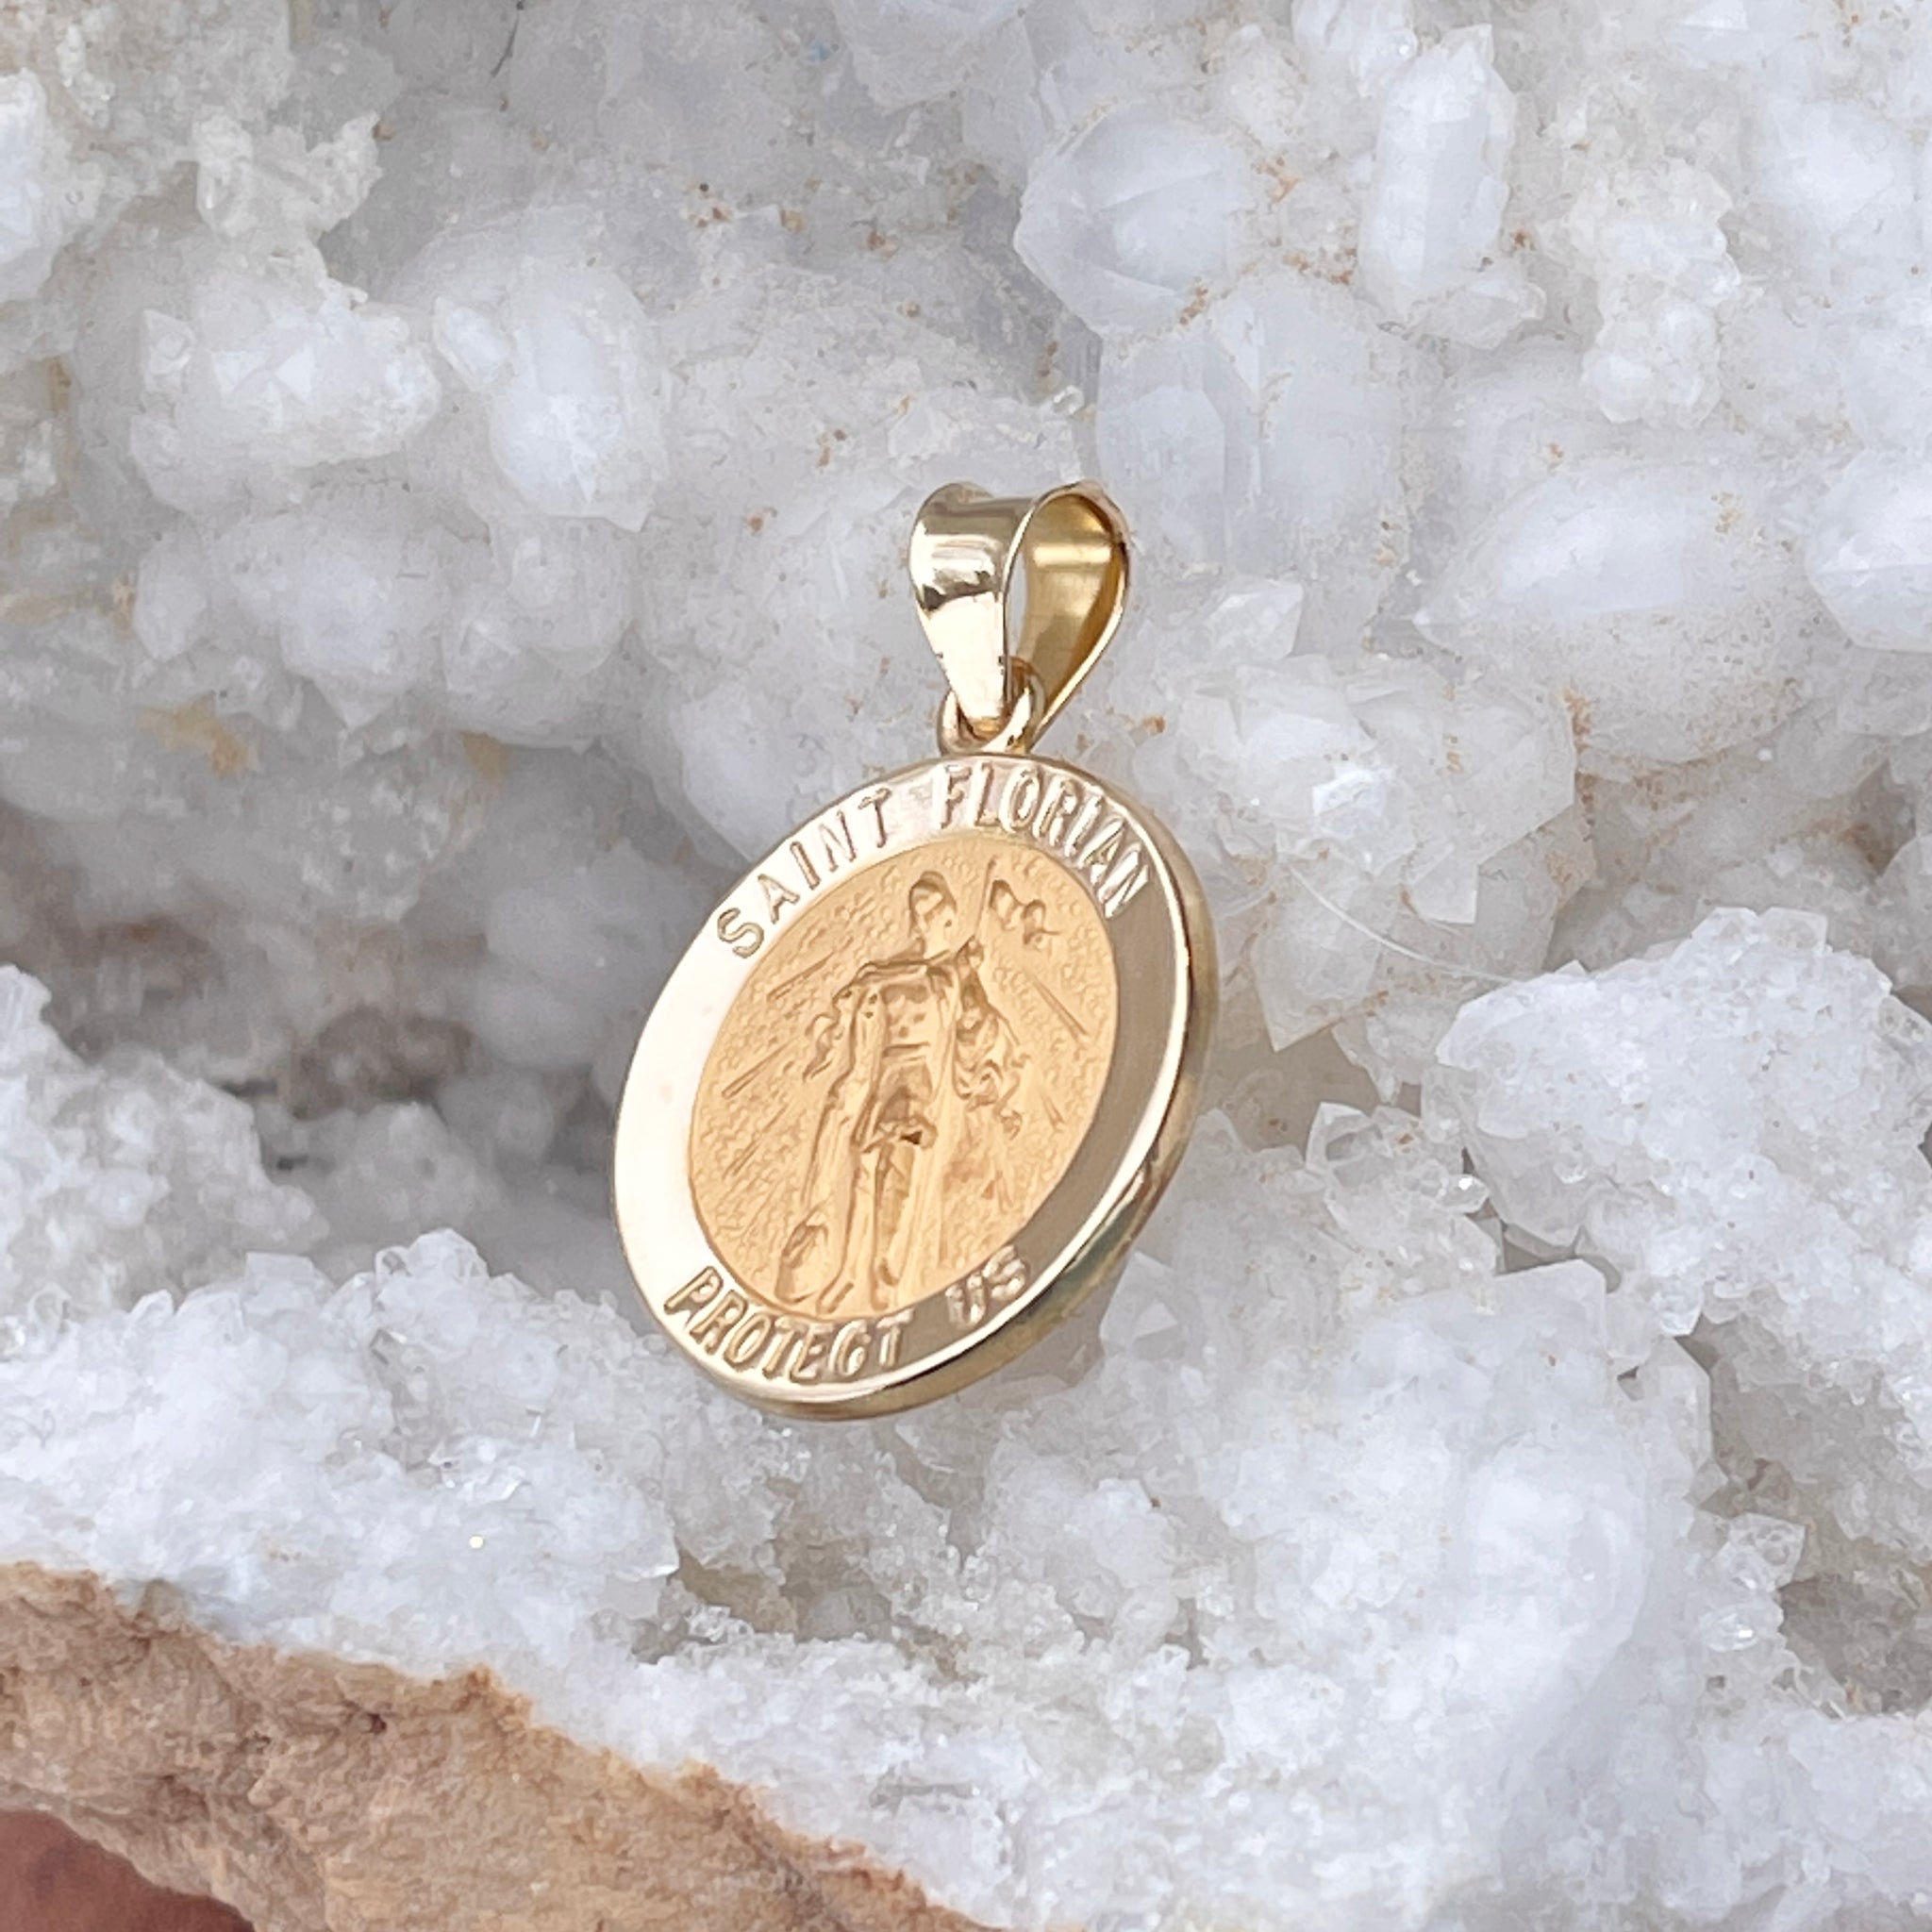 14k White Gold and Satin St. Florian Medal Pendant